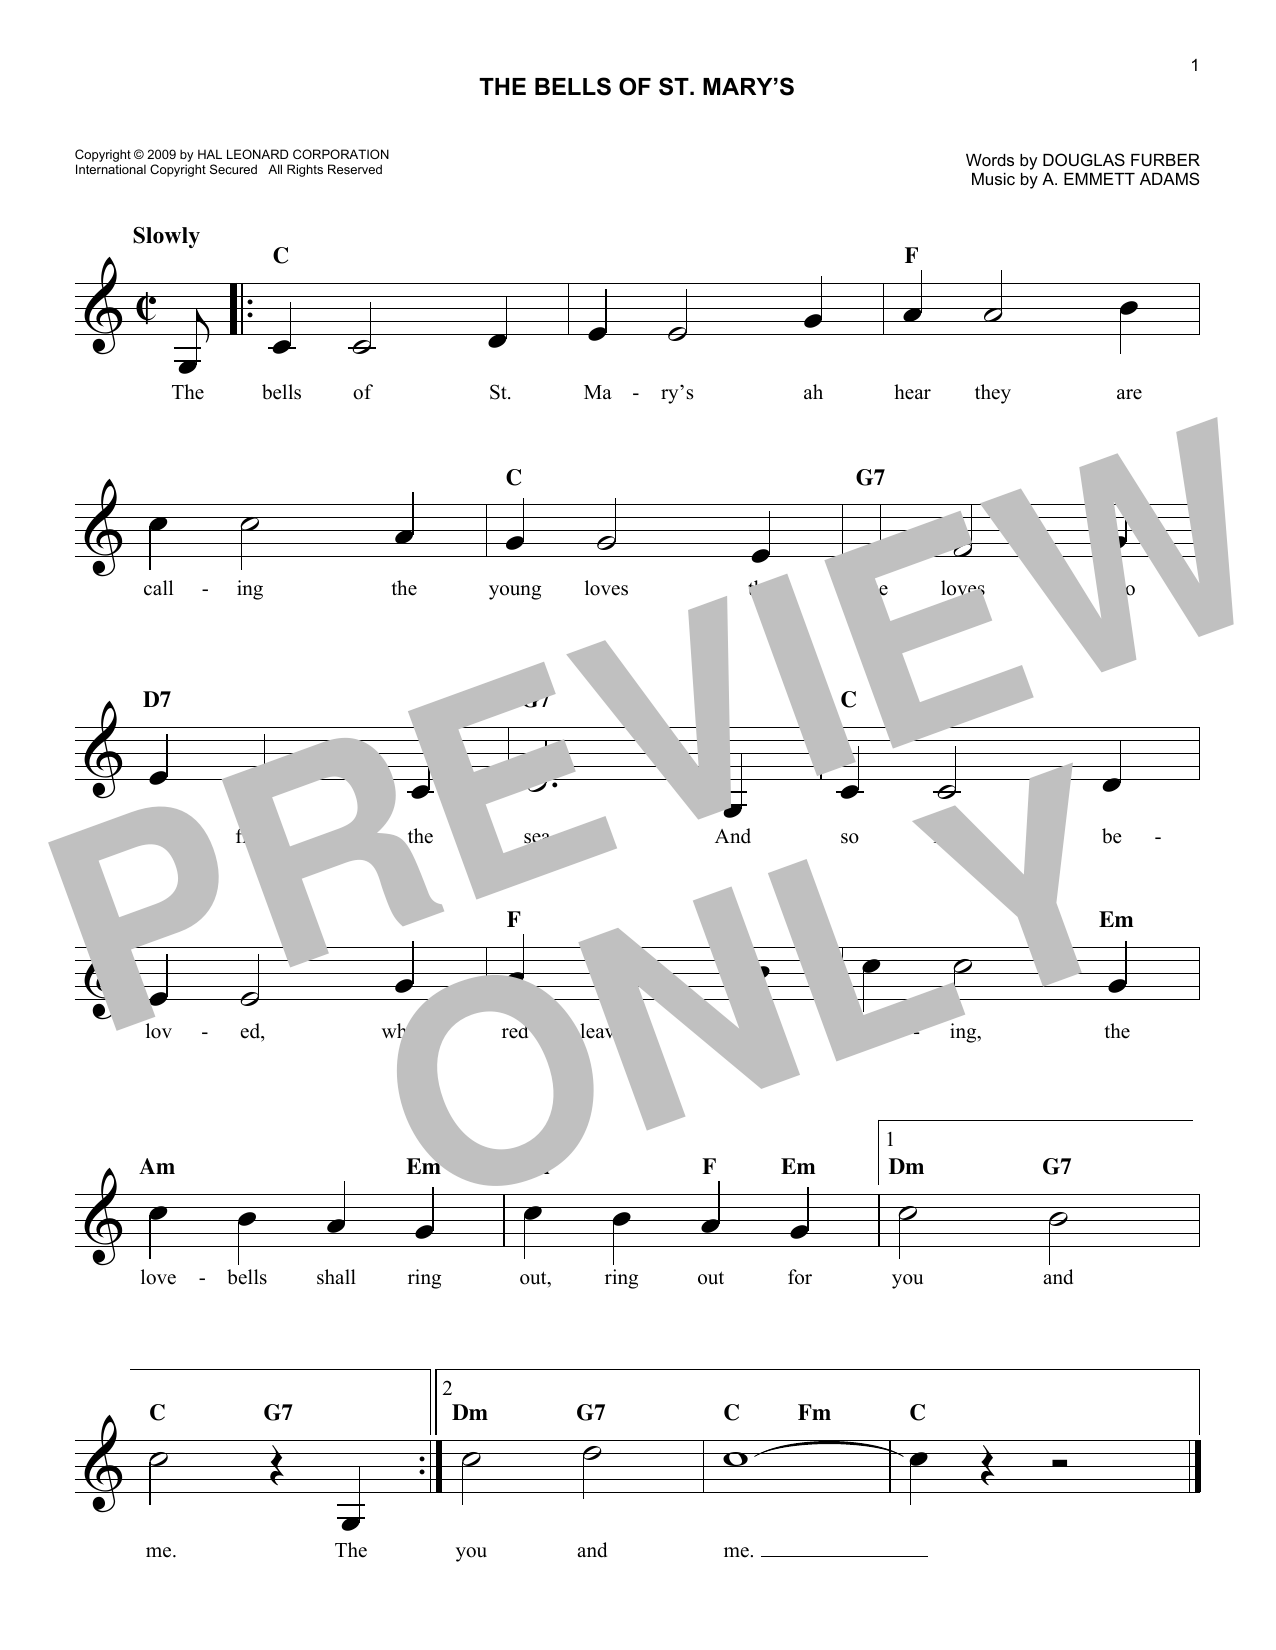 Download A. Emmett Adams The Bells Of St. Mary's Sheet Music